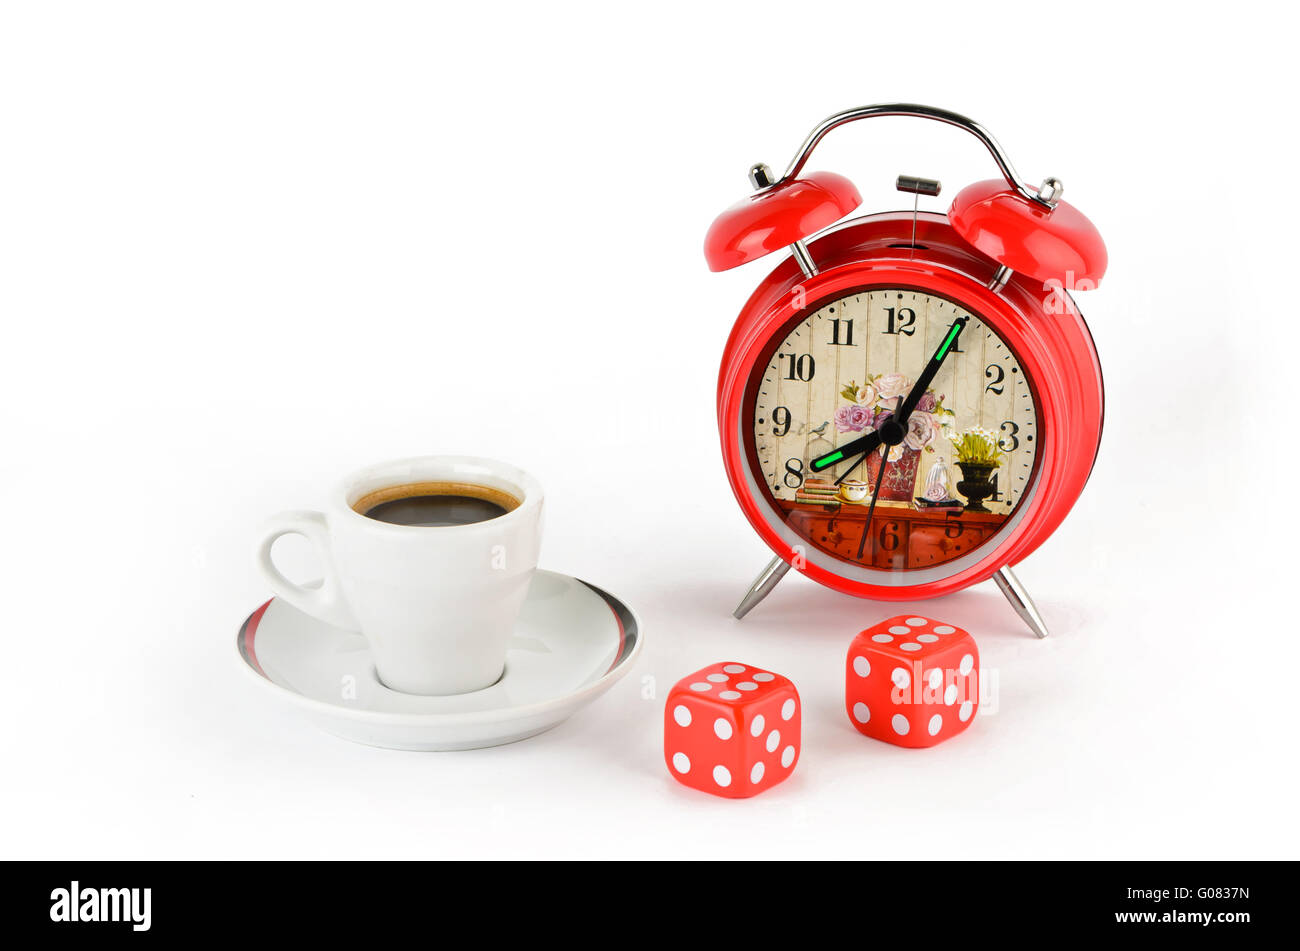 https://c8.alamy.com/comp/G0837N/red-alarm-clock-coffee-cup-and-dice-G0837N.jpg